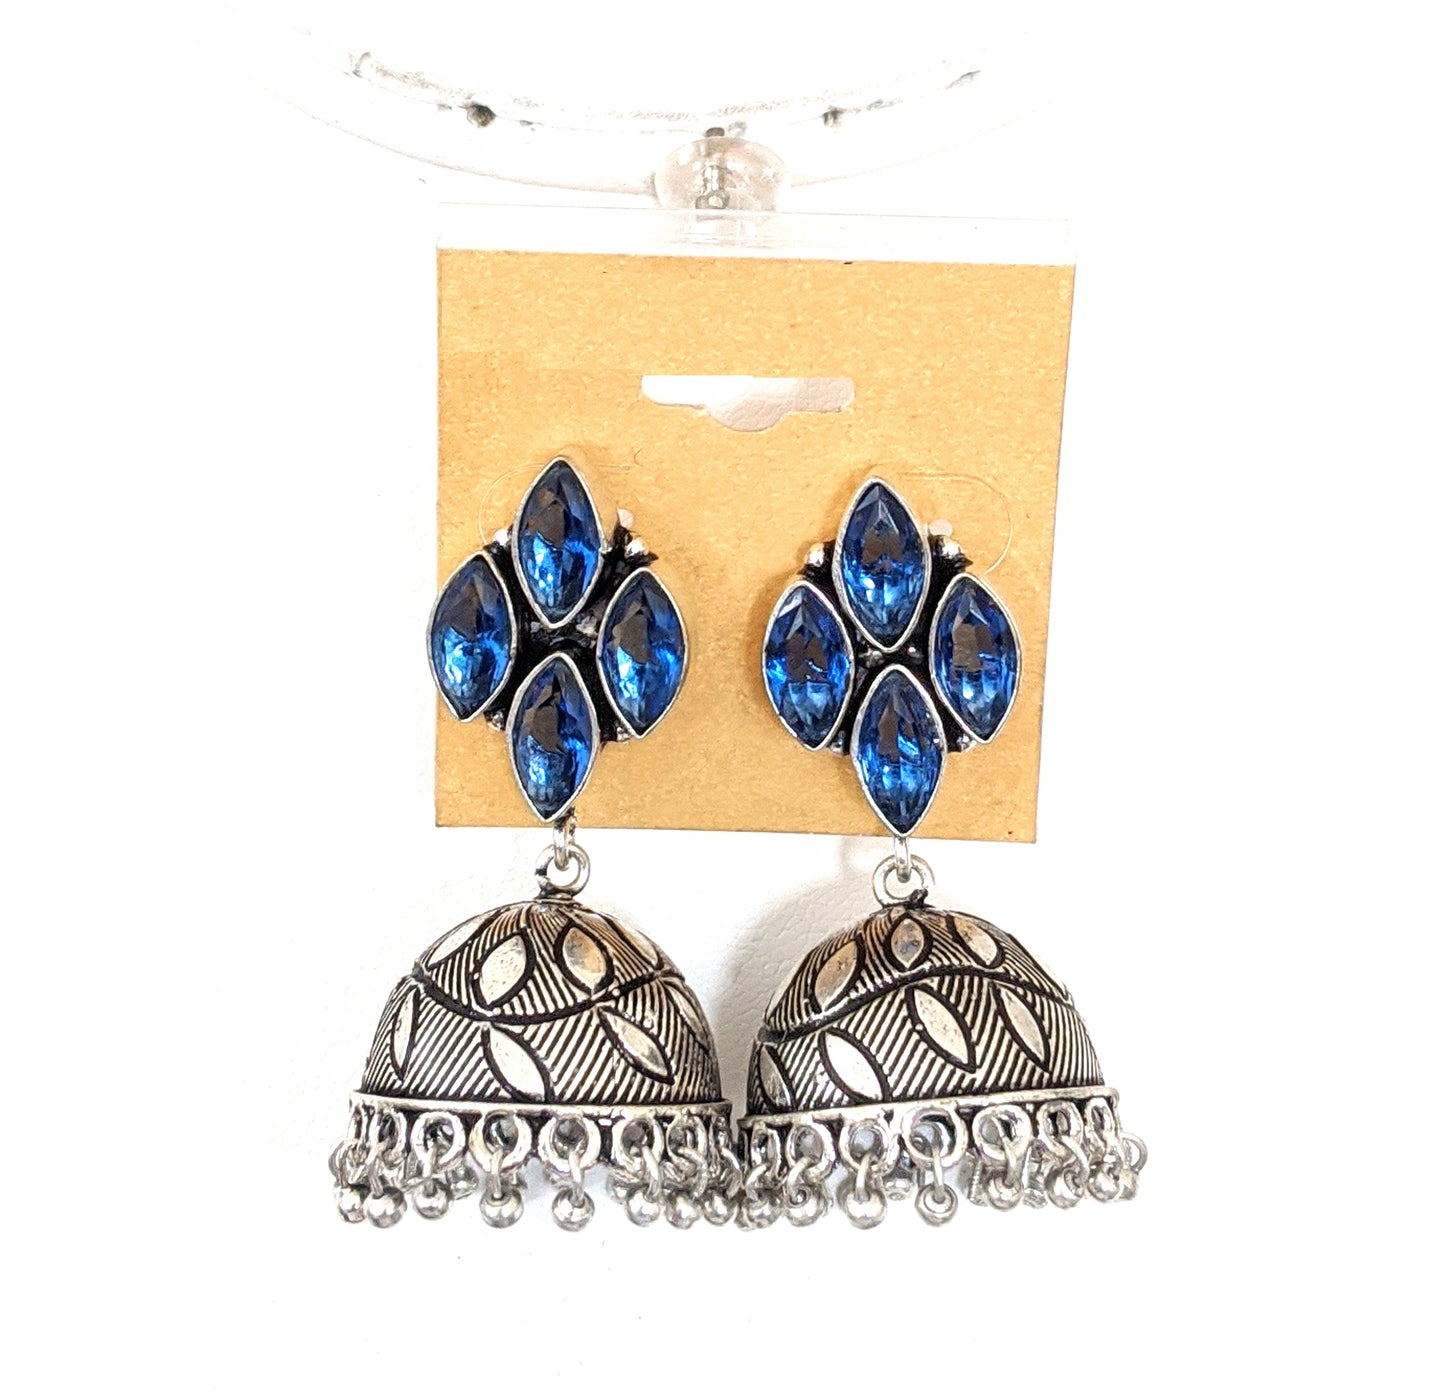 Oxidized silver CZ jhumka earrings - 2 designs